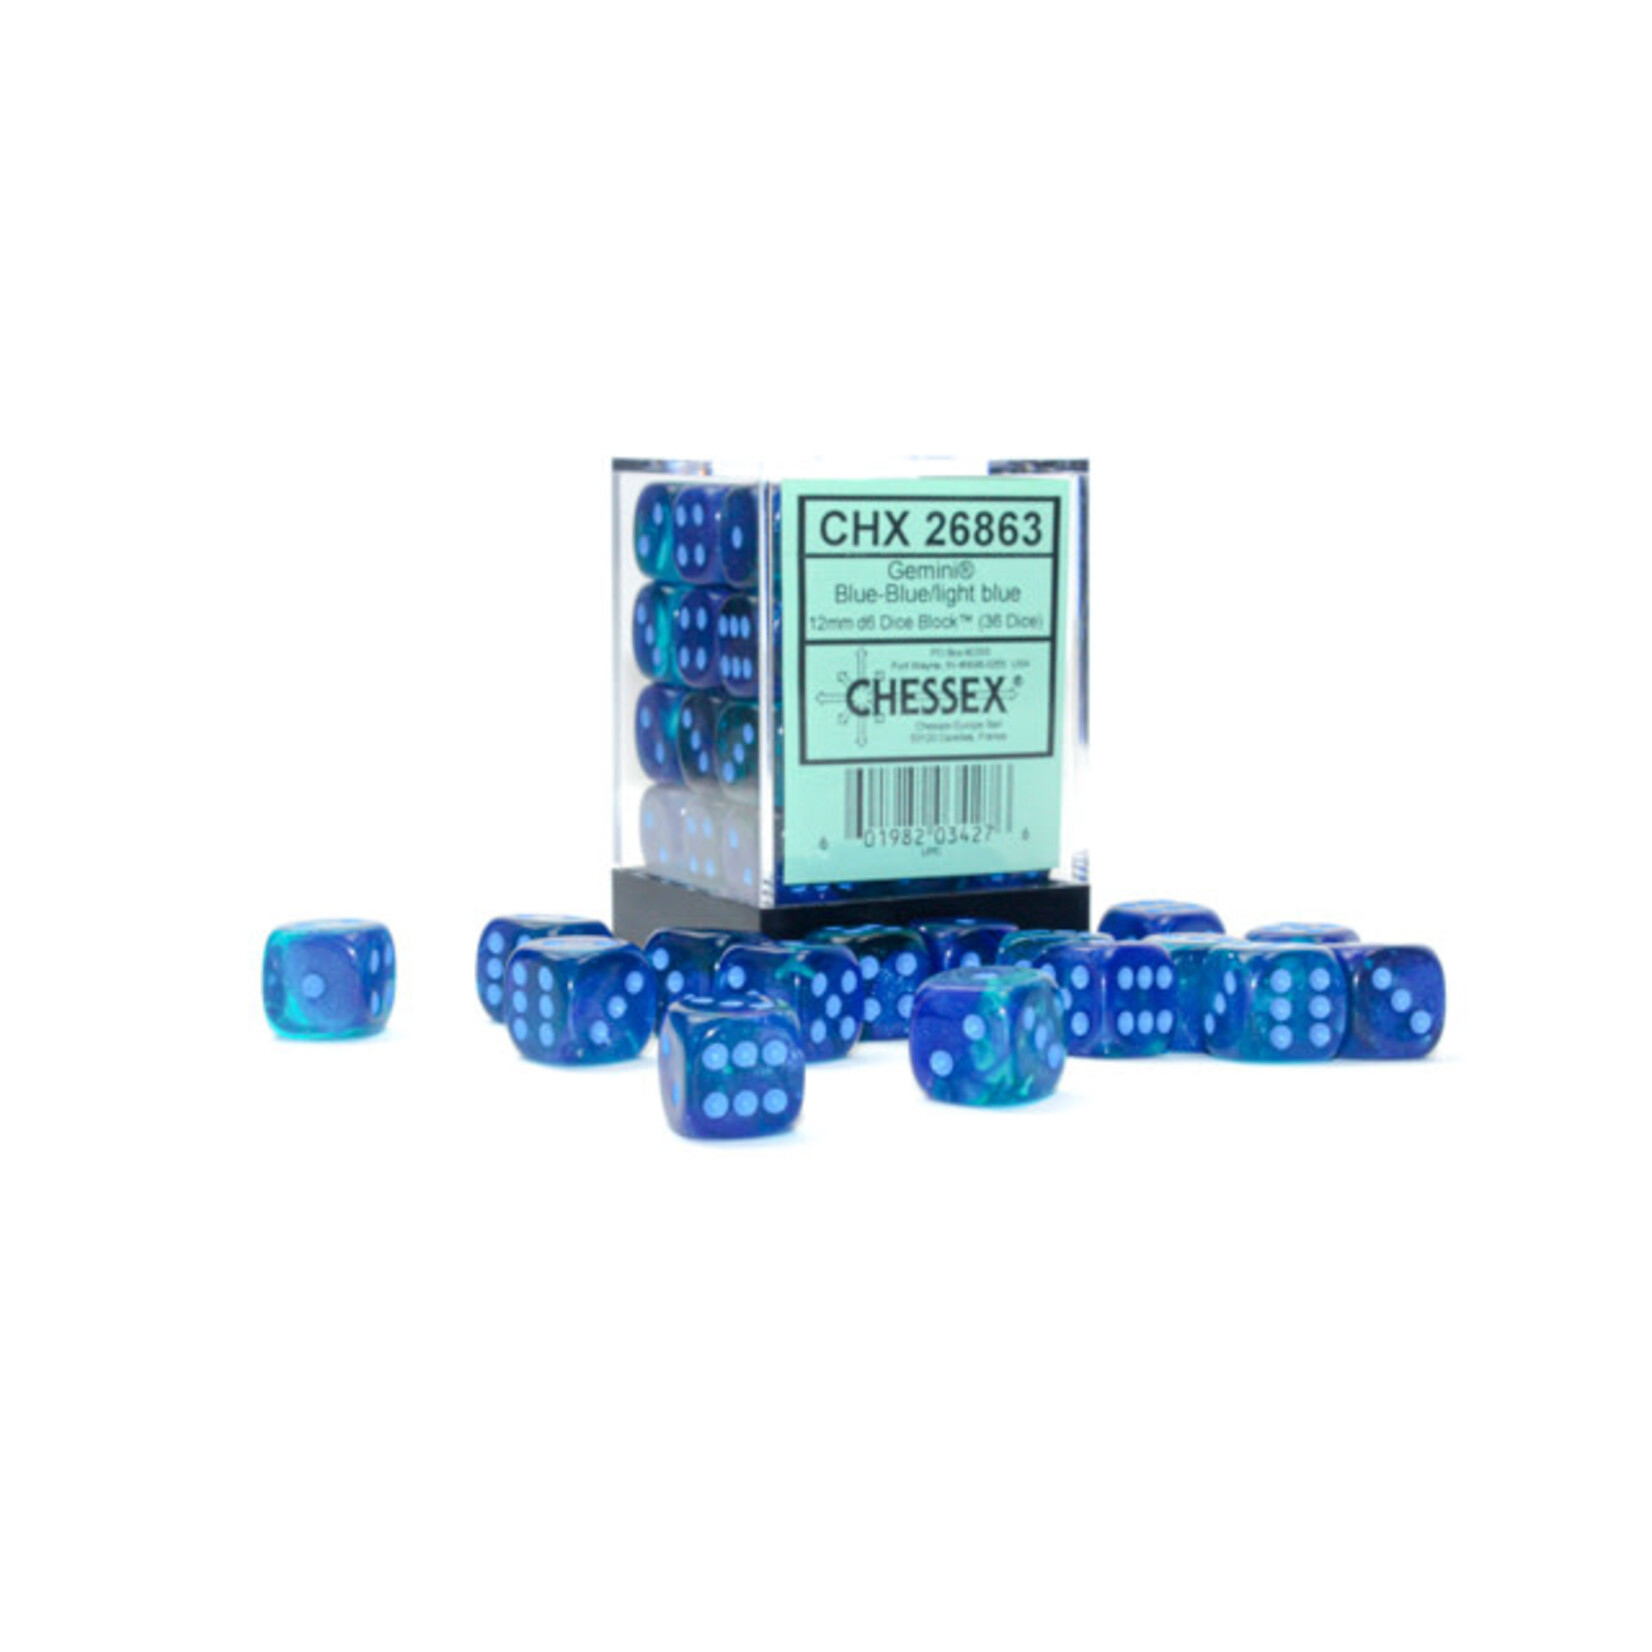 Chessex Gemini Blue-Blue/light blue Luminary 12mm d6 Dice Block (36 dice)